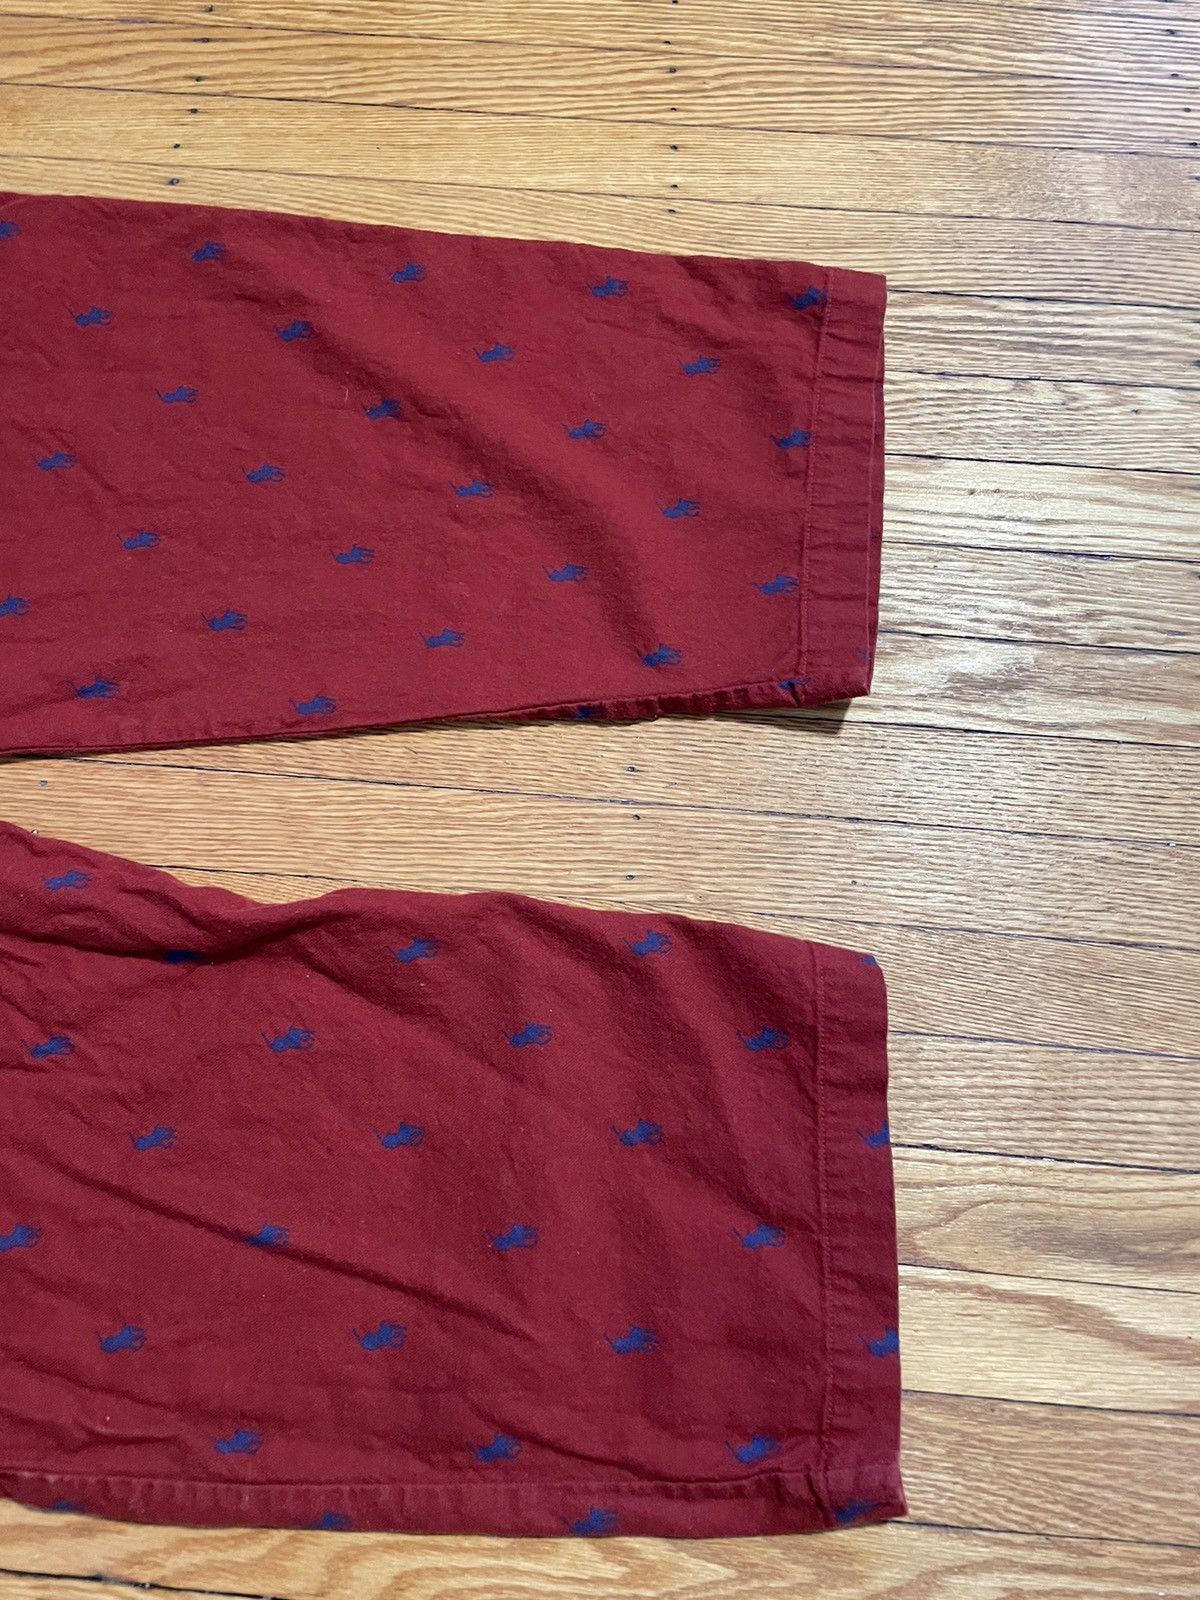 Ralph Lauren Vintage Polo Ralph Lauren Sleepwear Monogram Pants Trousers Size US 31 - 5 Thumbnail